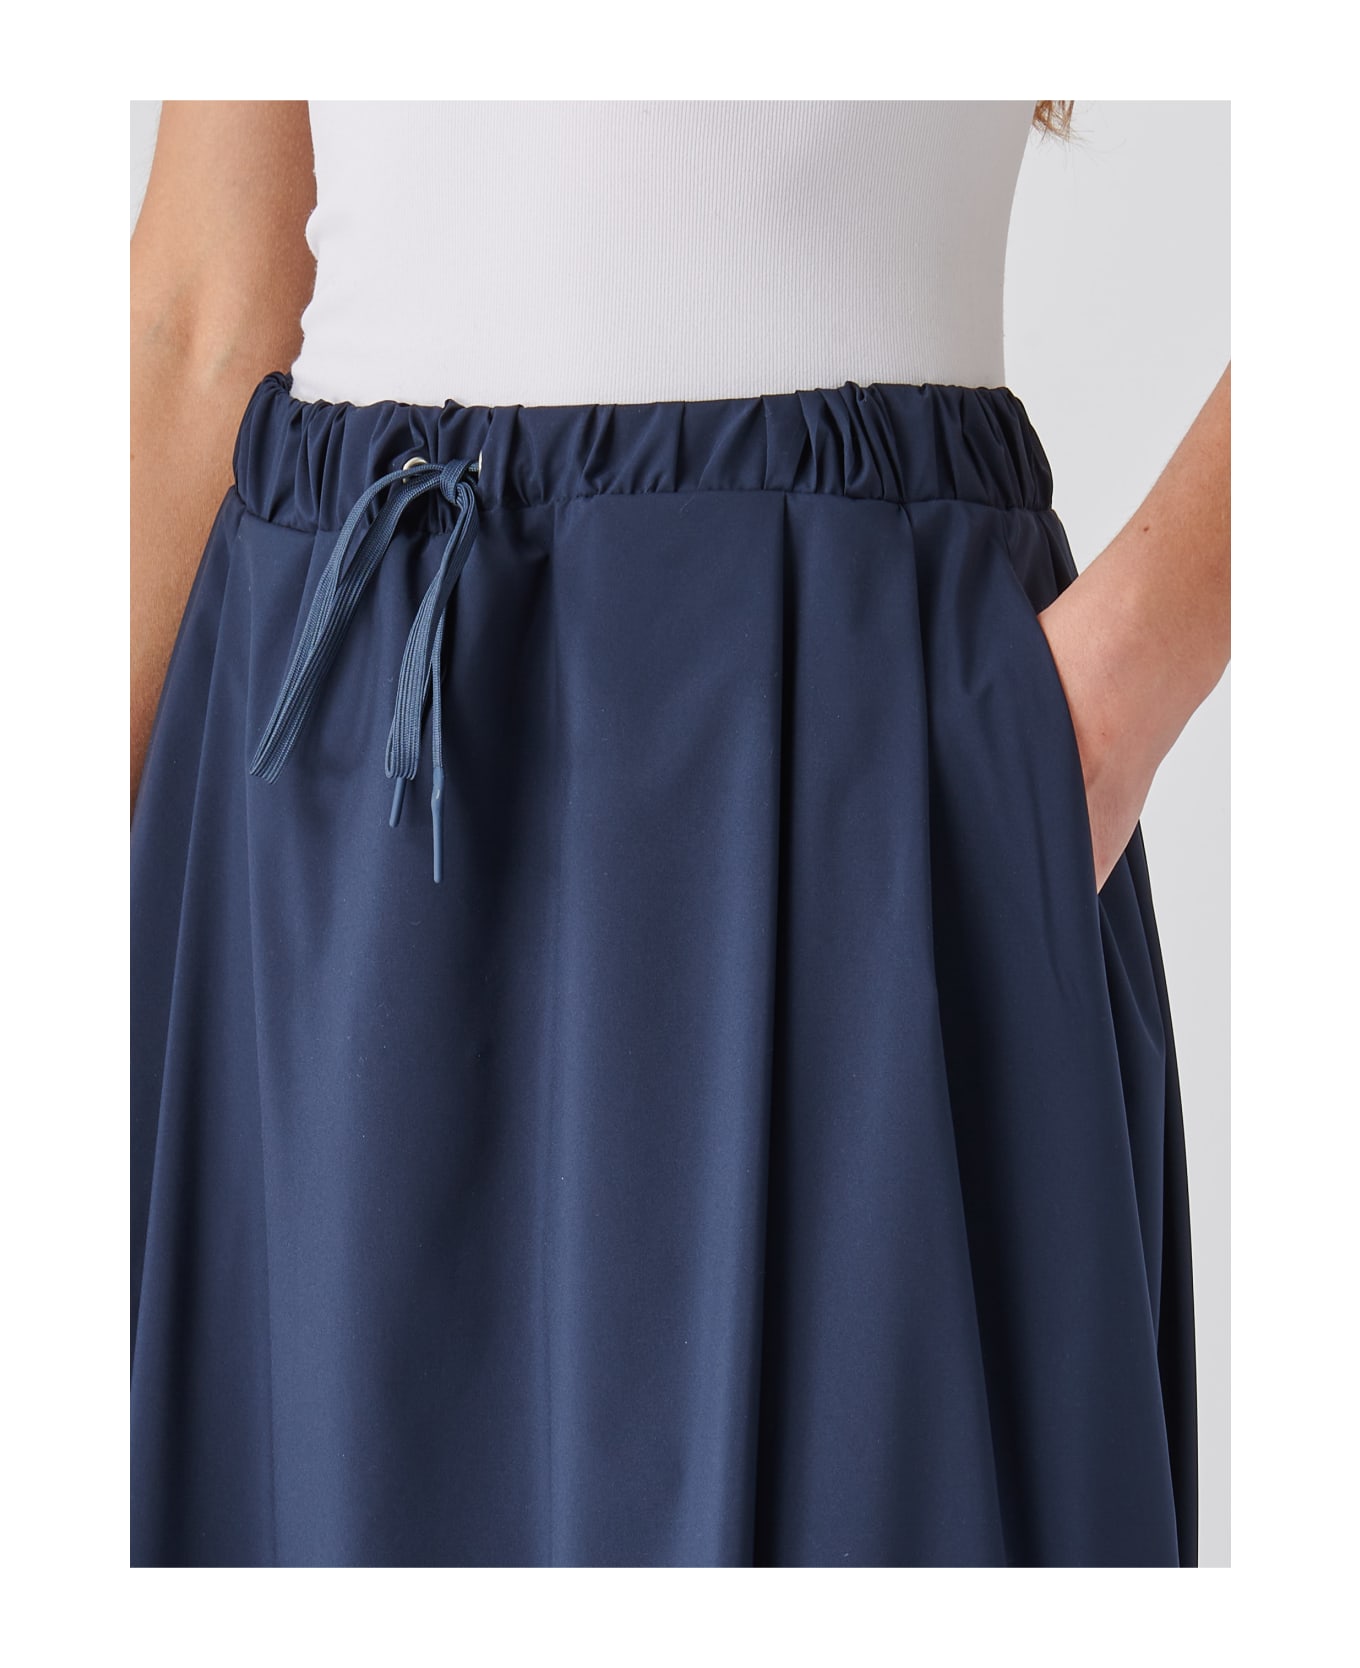 Gran Sasso Poliester Skirt - NAVY スカート